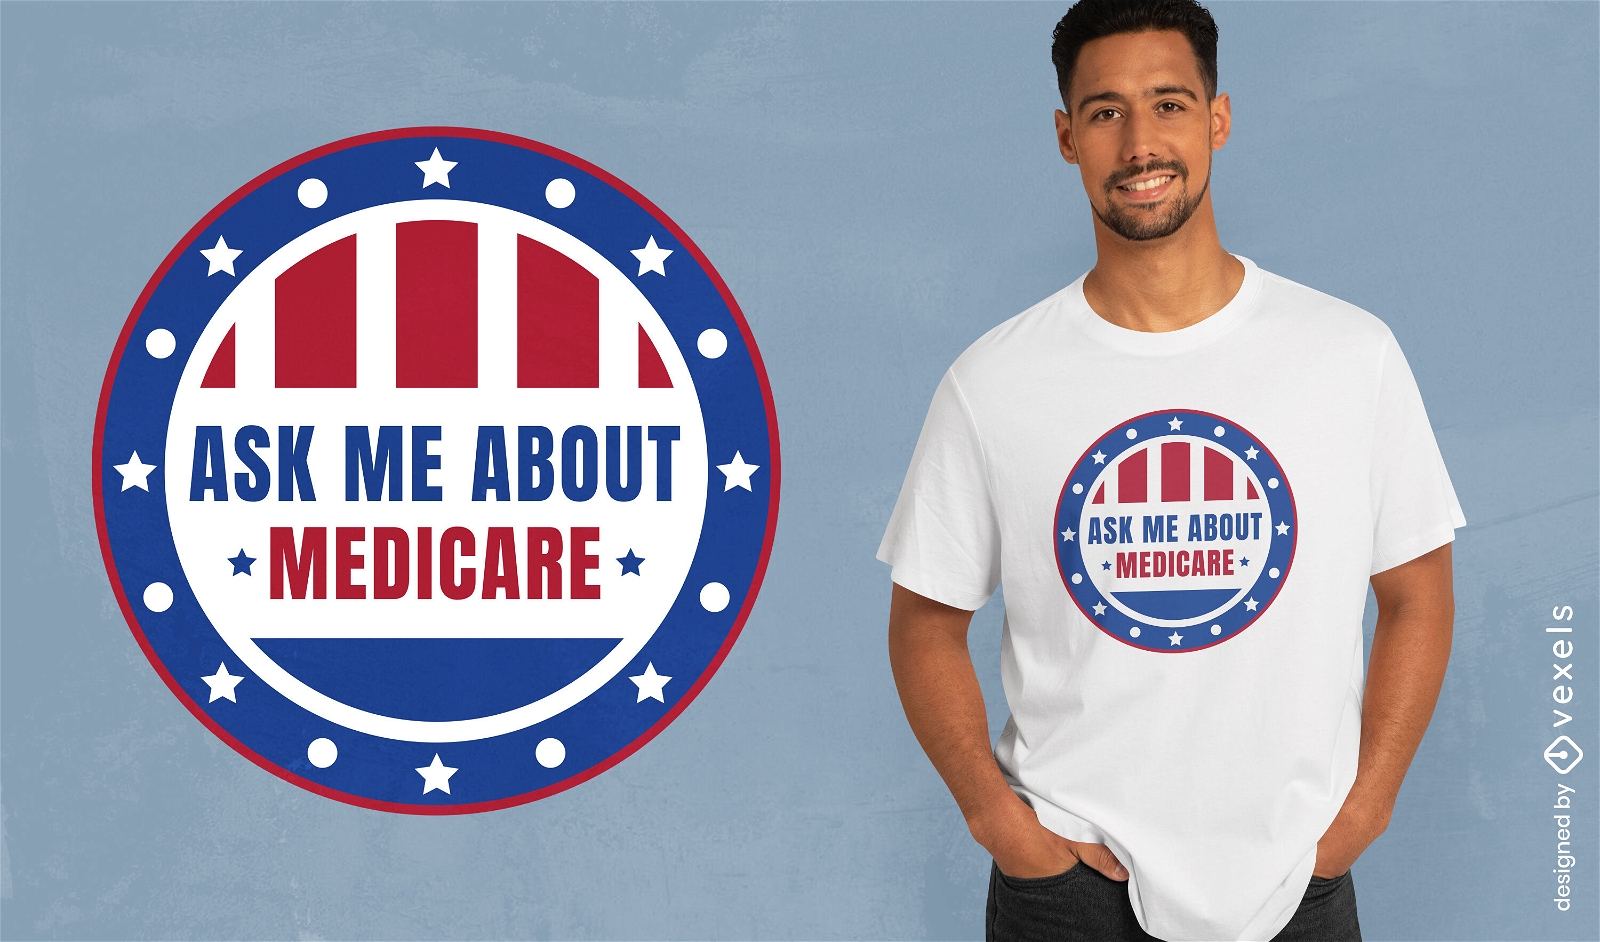 Dise?o de camiseta de insignia de consulta de Medicare.